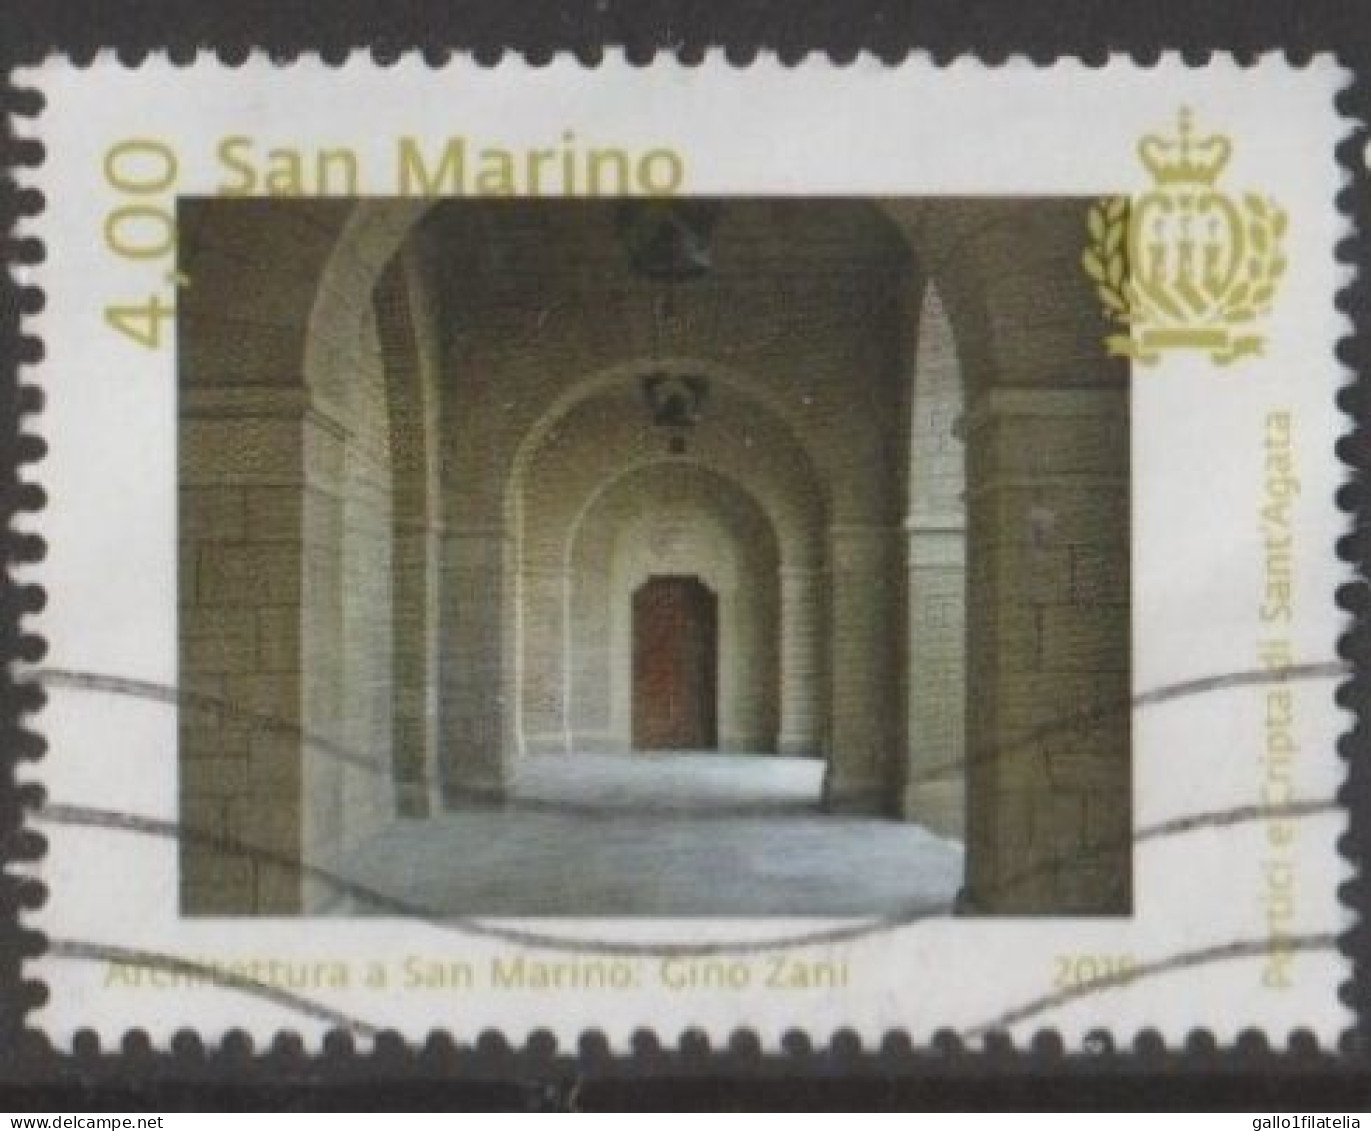 2015 - SAN MARINO - ARCHITETTURA A SAN MARINO / ARCHITECTURE IN SAN MARINO - USATO. - Oblitérés